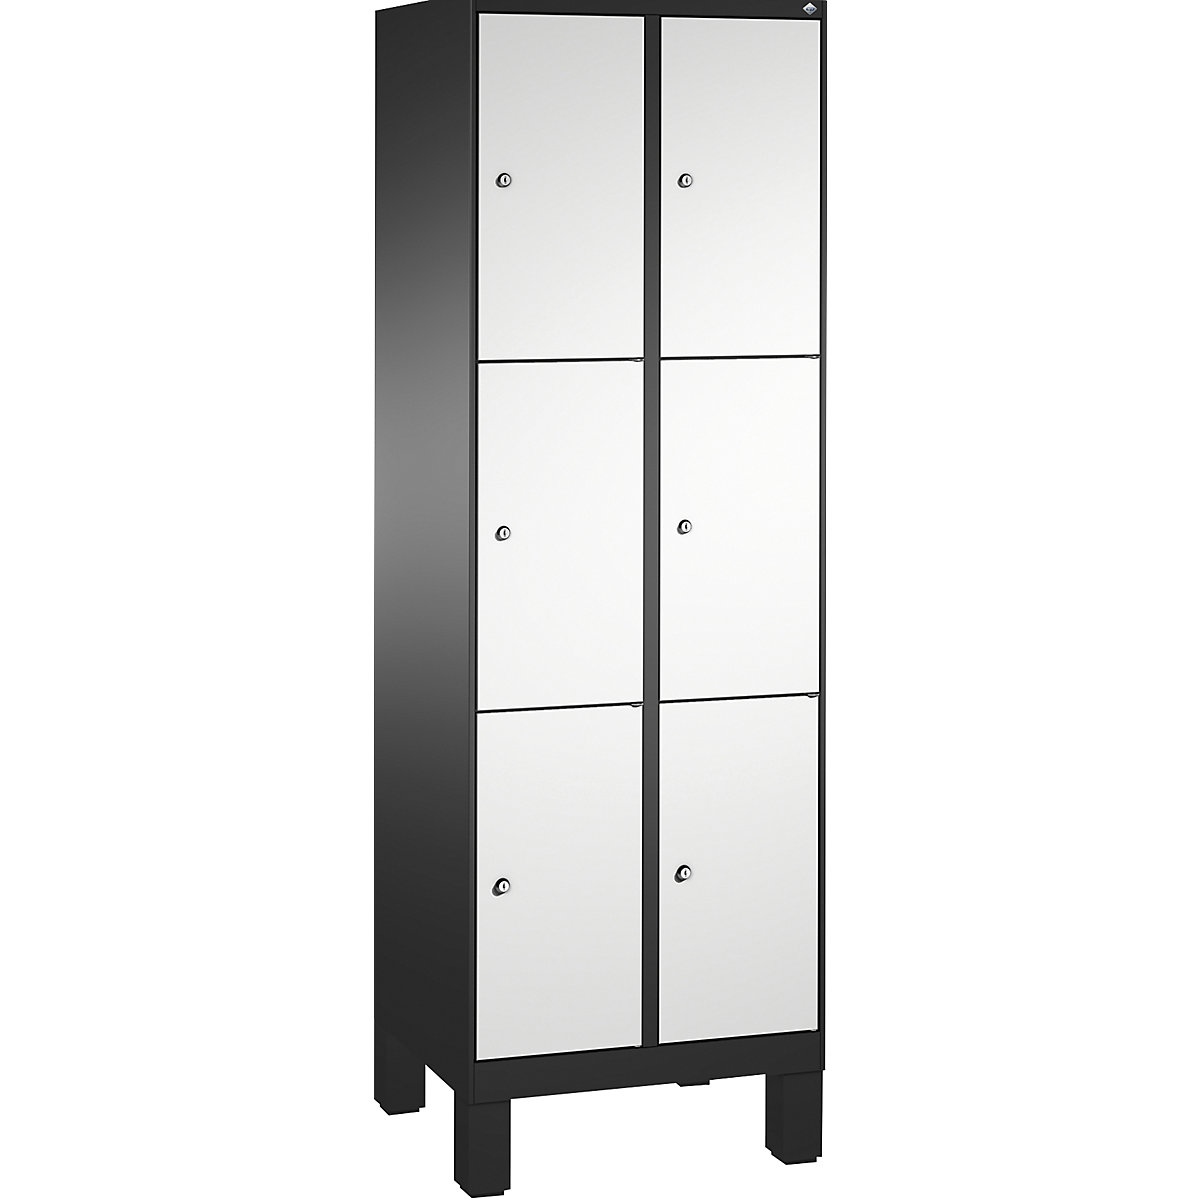 EVOLO locker unit, with feet – C+P, 2 compartments, 3 shelf compartments each, compartment width 300 mm, black grey / light grey-5